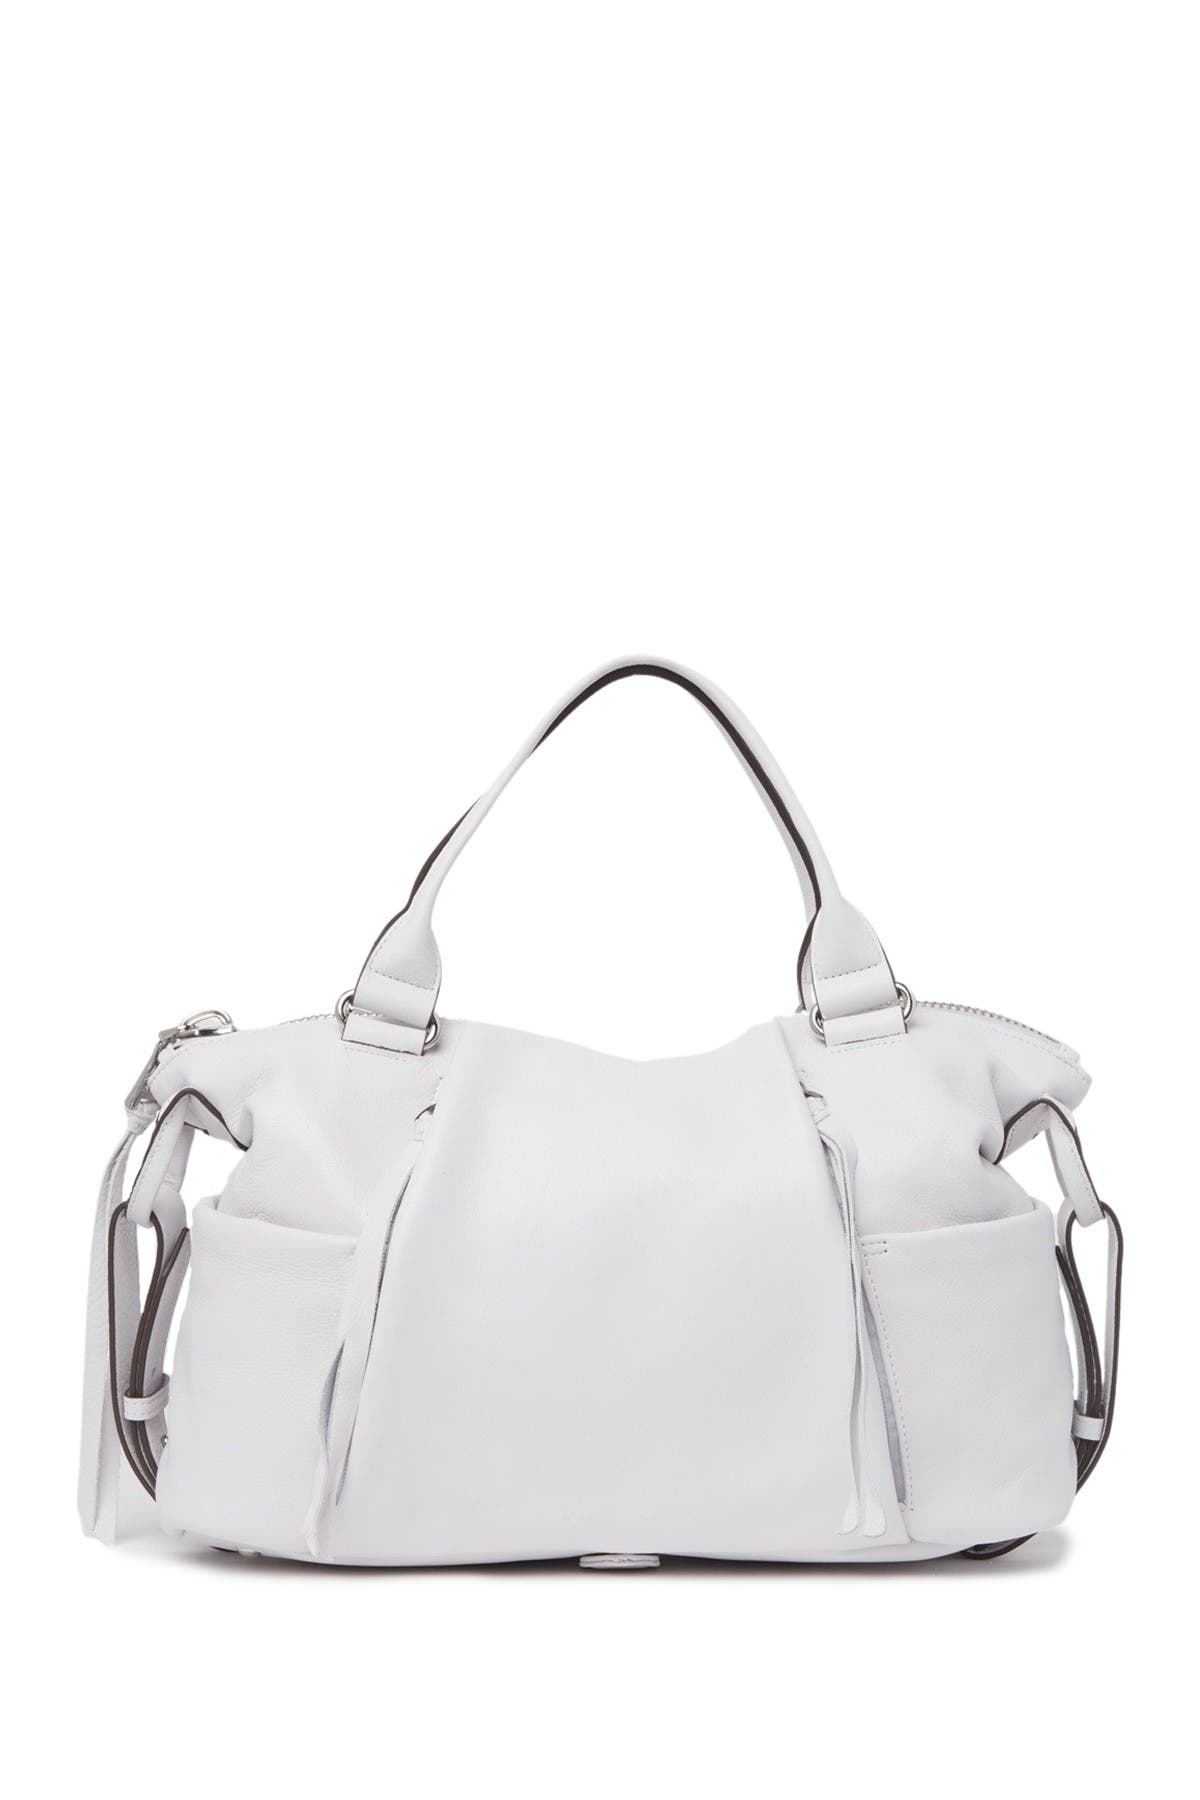 Aimee Kestenberg Tamitha Satchel Bag In White